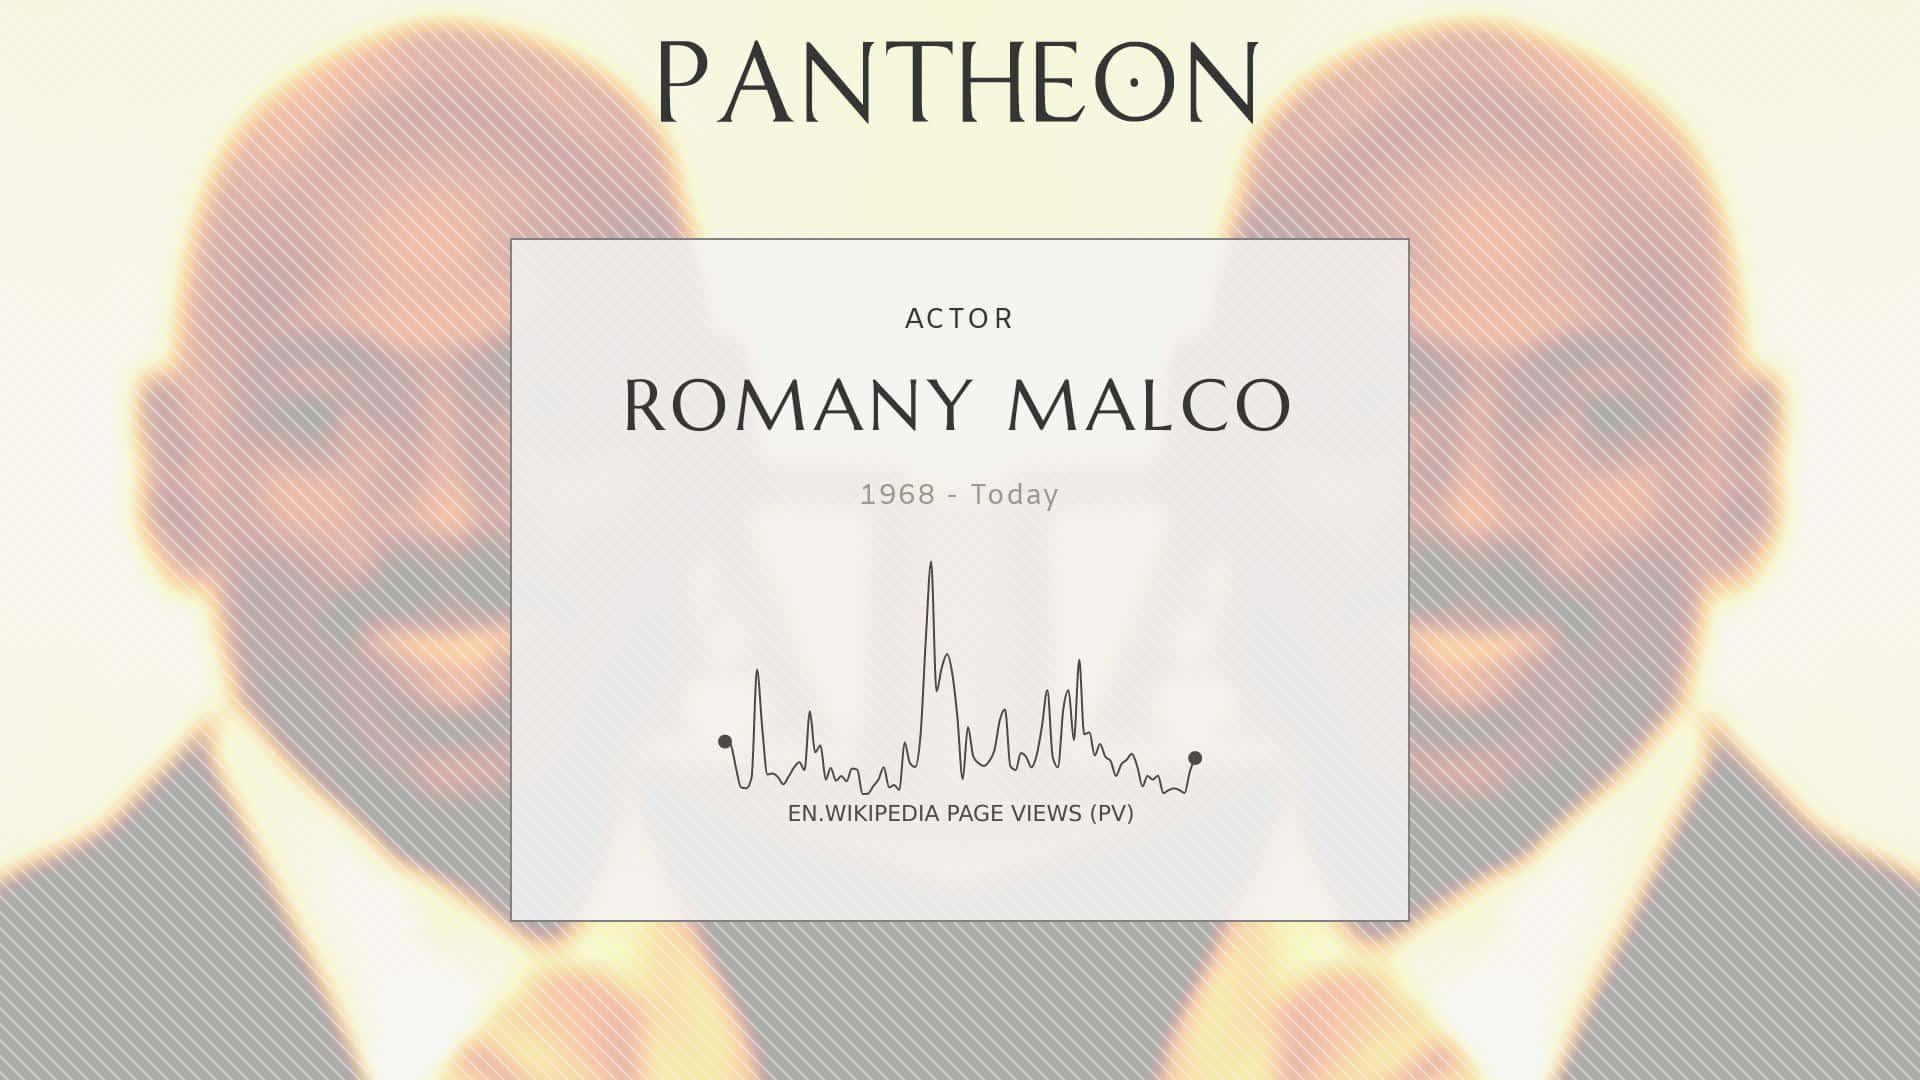 Romany Malco Pantheon Profilvisninger Diagram Wallpaper